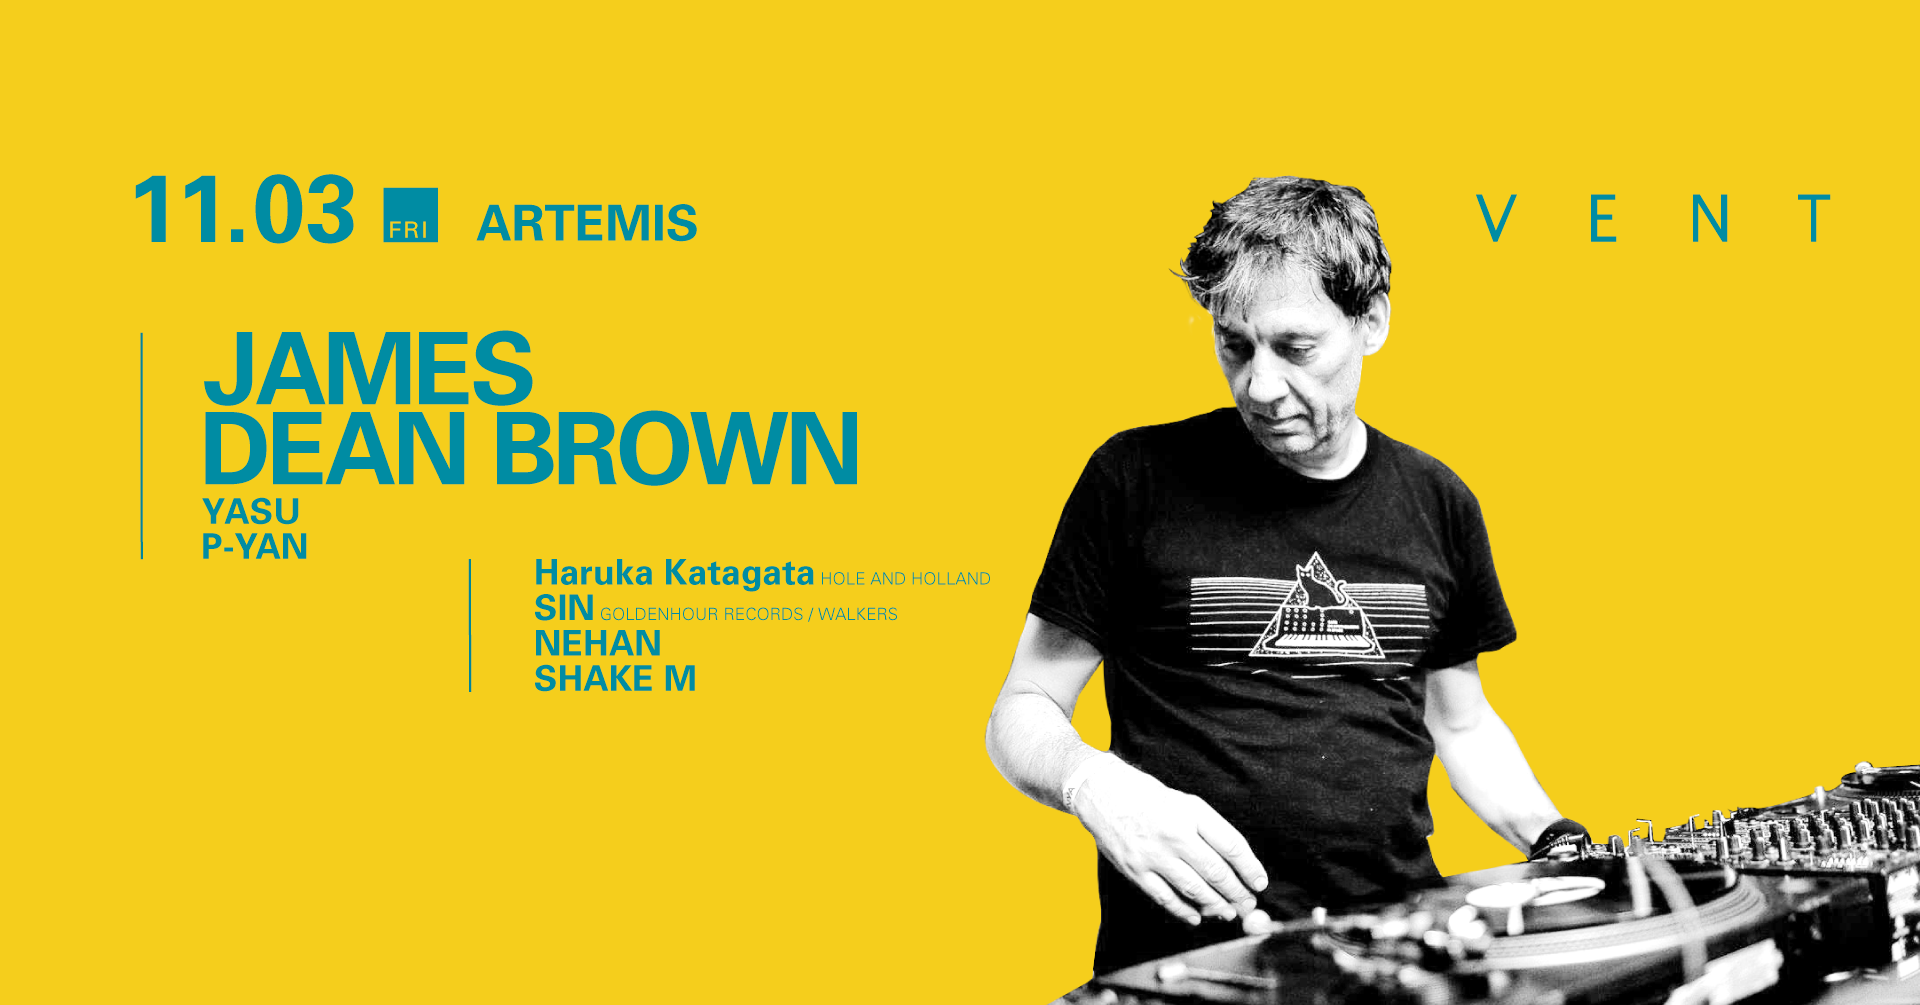 JAMES DEAN BROWN at ARTEMIS